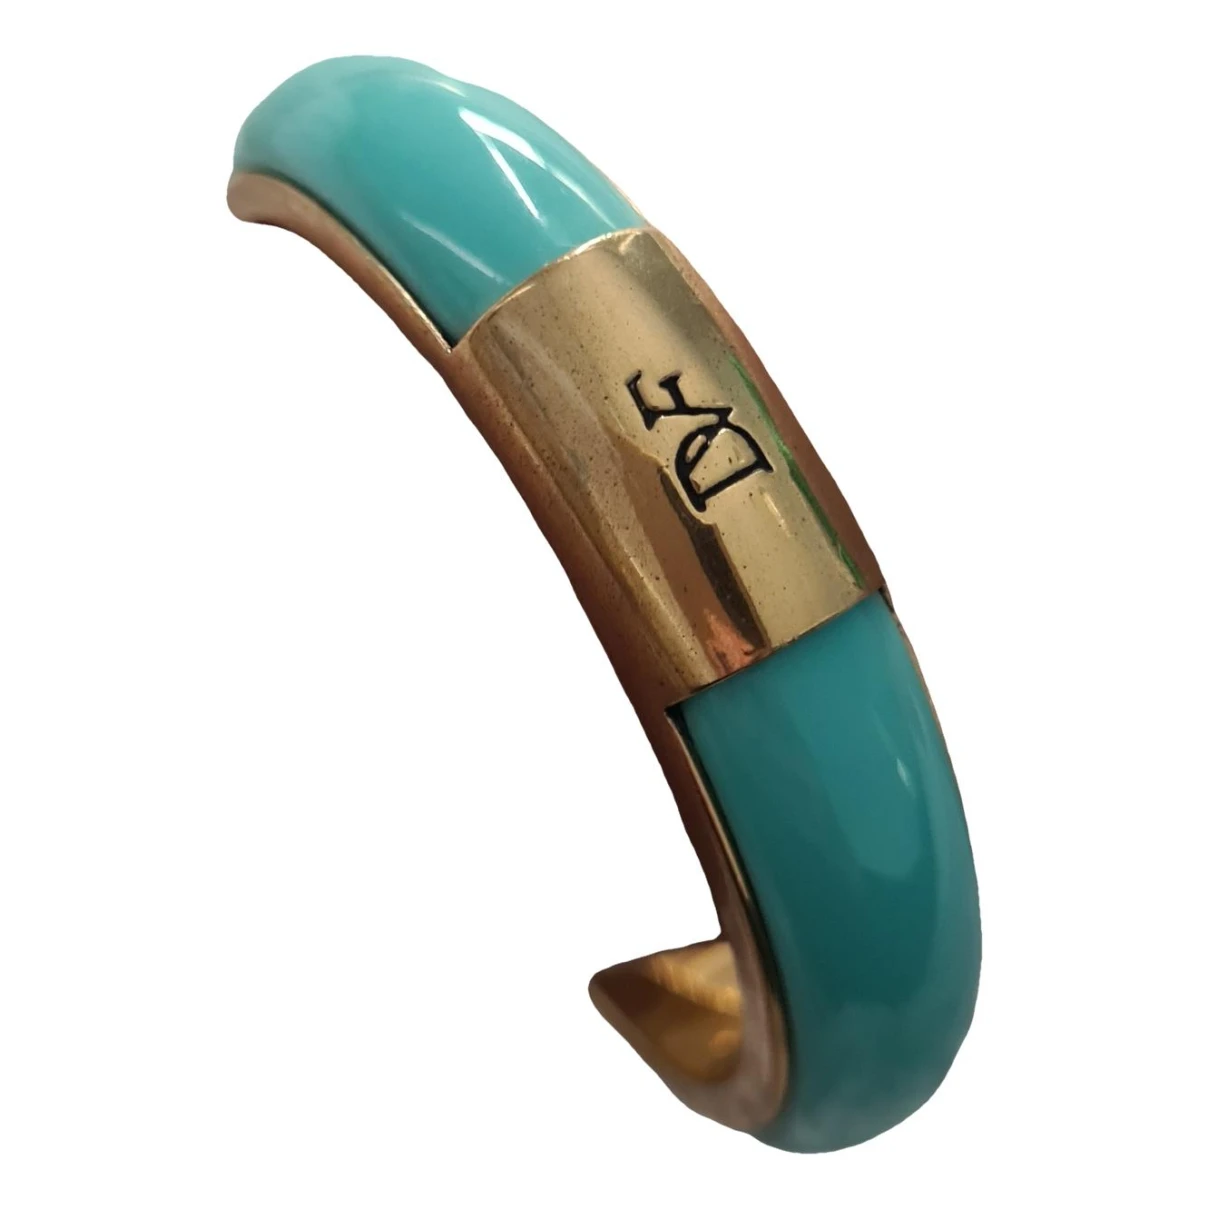 jewellery Diane Von Furstenberg bracelets for Female Plastic. Used condition